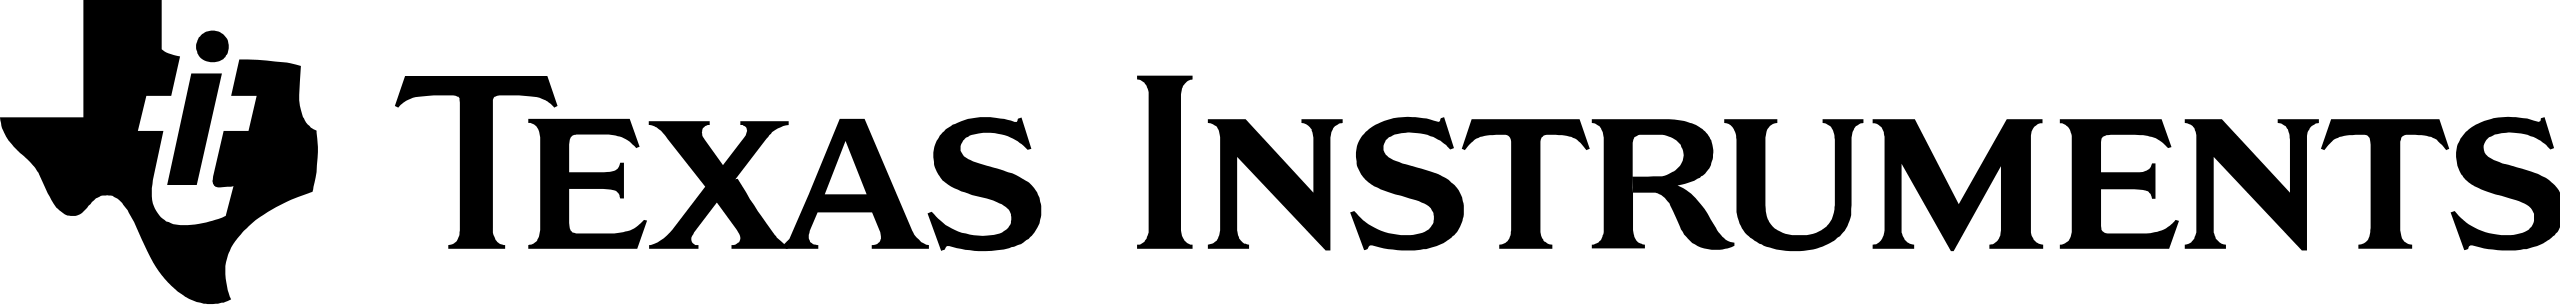 Texas Instruments Logo.svg